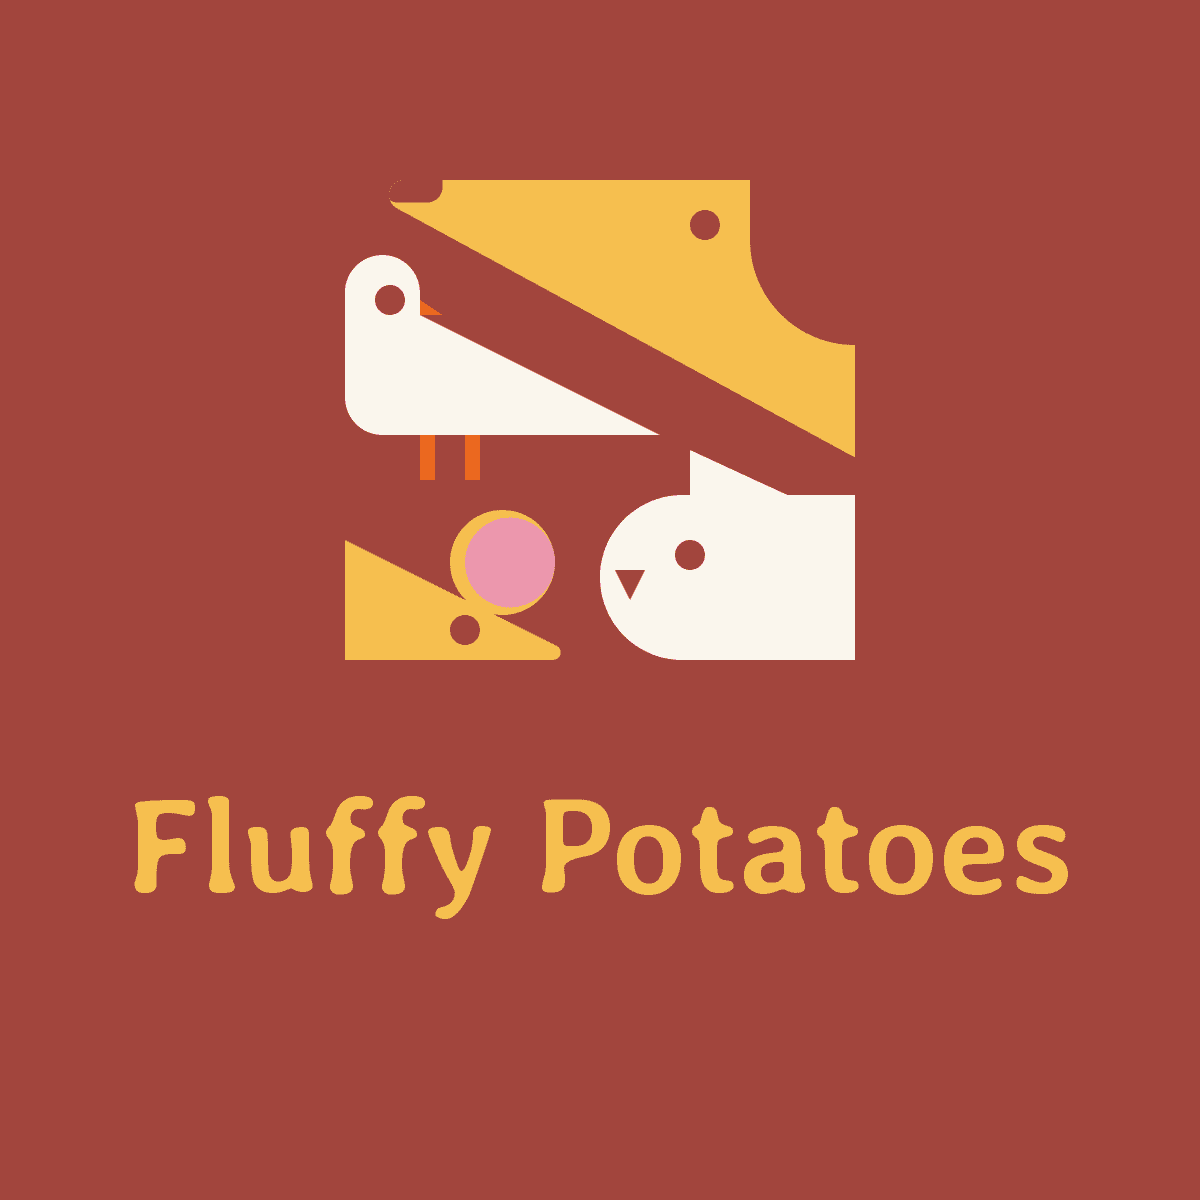 Fluffy Potatoes